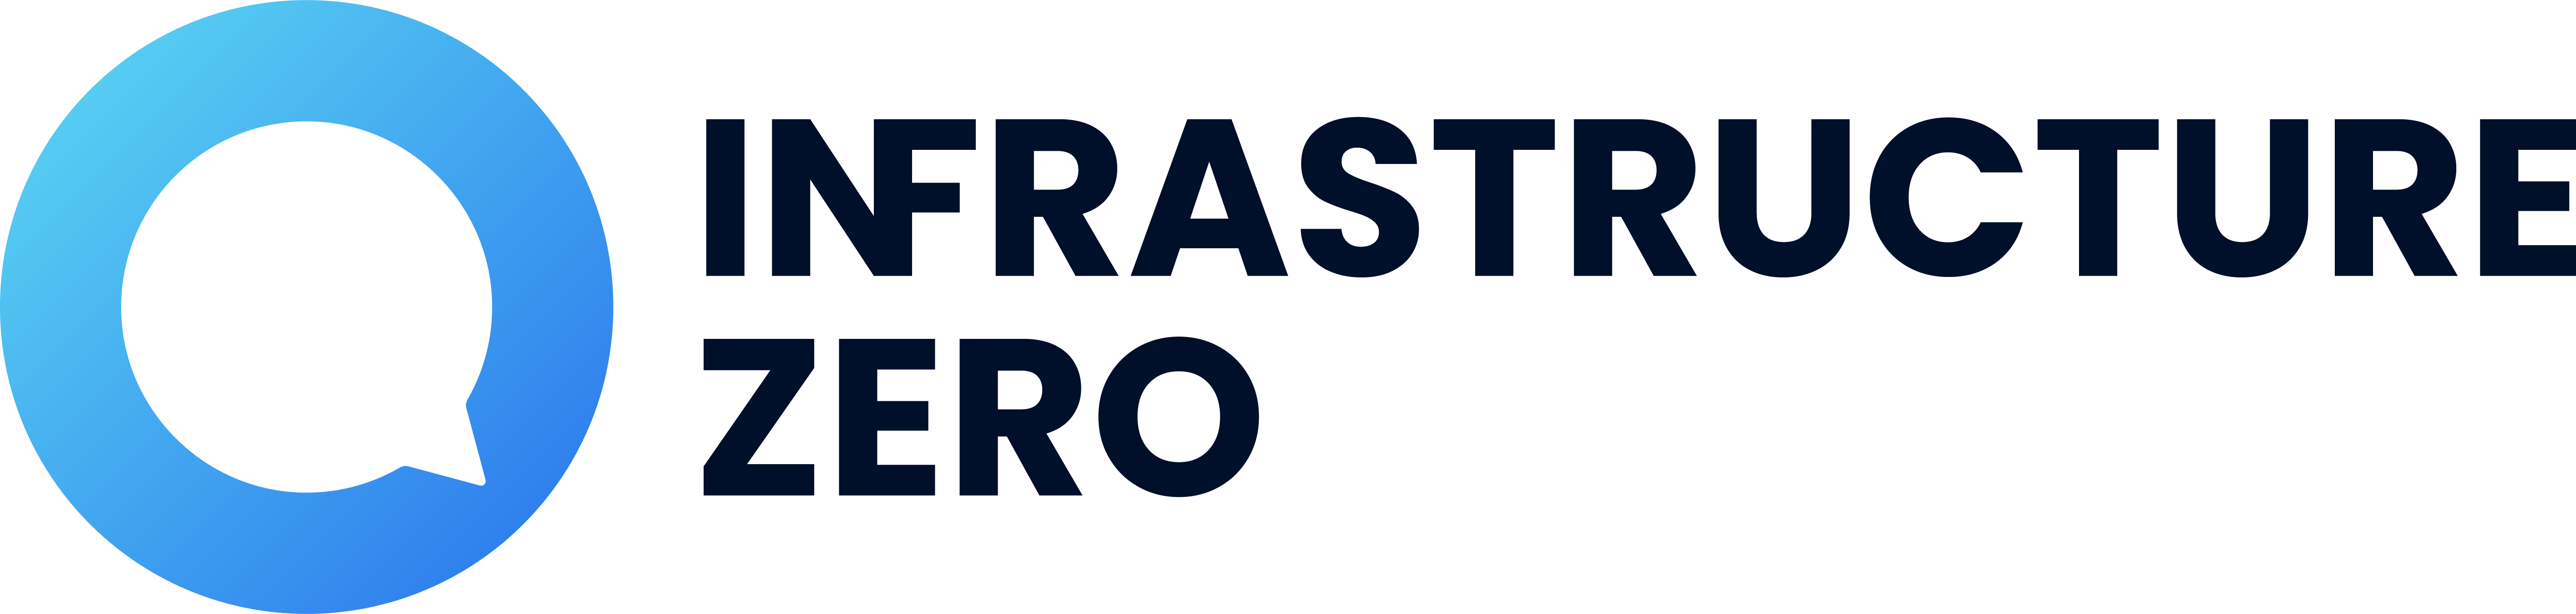 Infrastructure Zero Logo